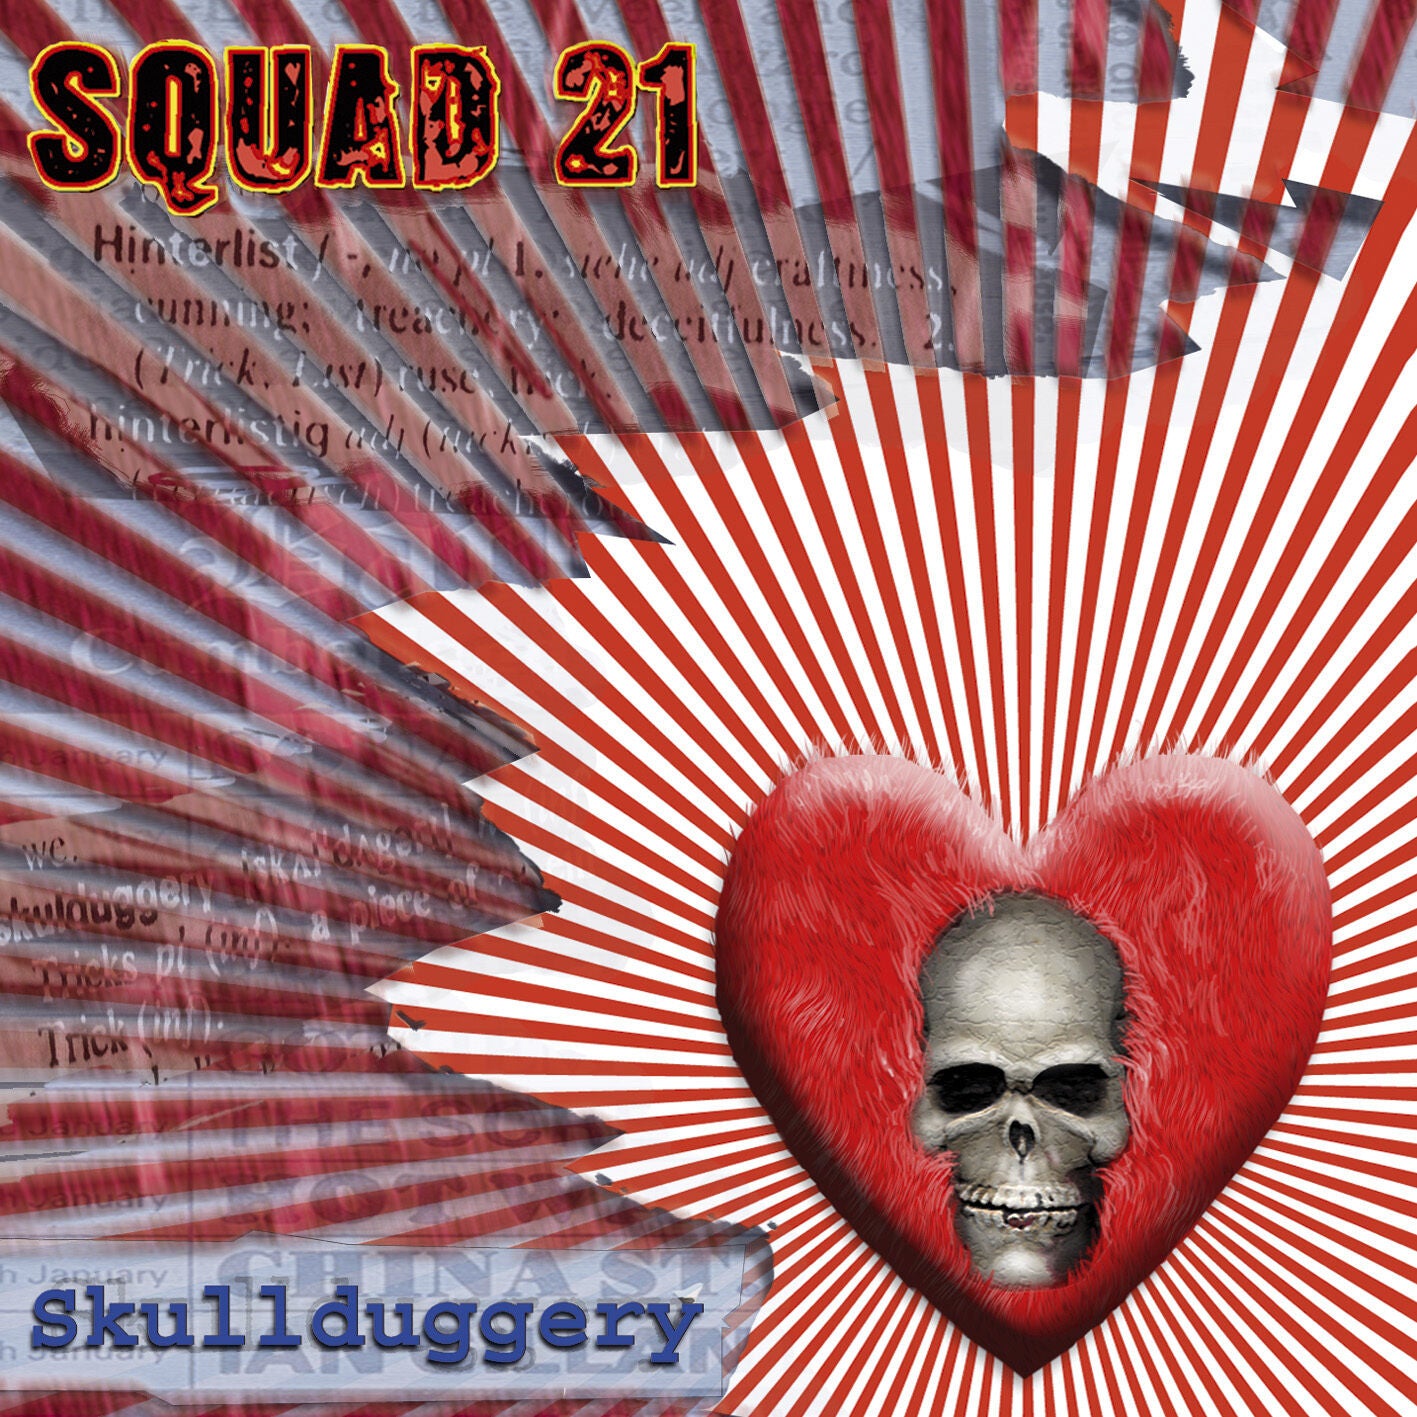 SQUAD 21 - Skullduggery CD 2004 Punk Rock Gus Chambers ex-Grip Inc.